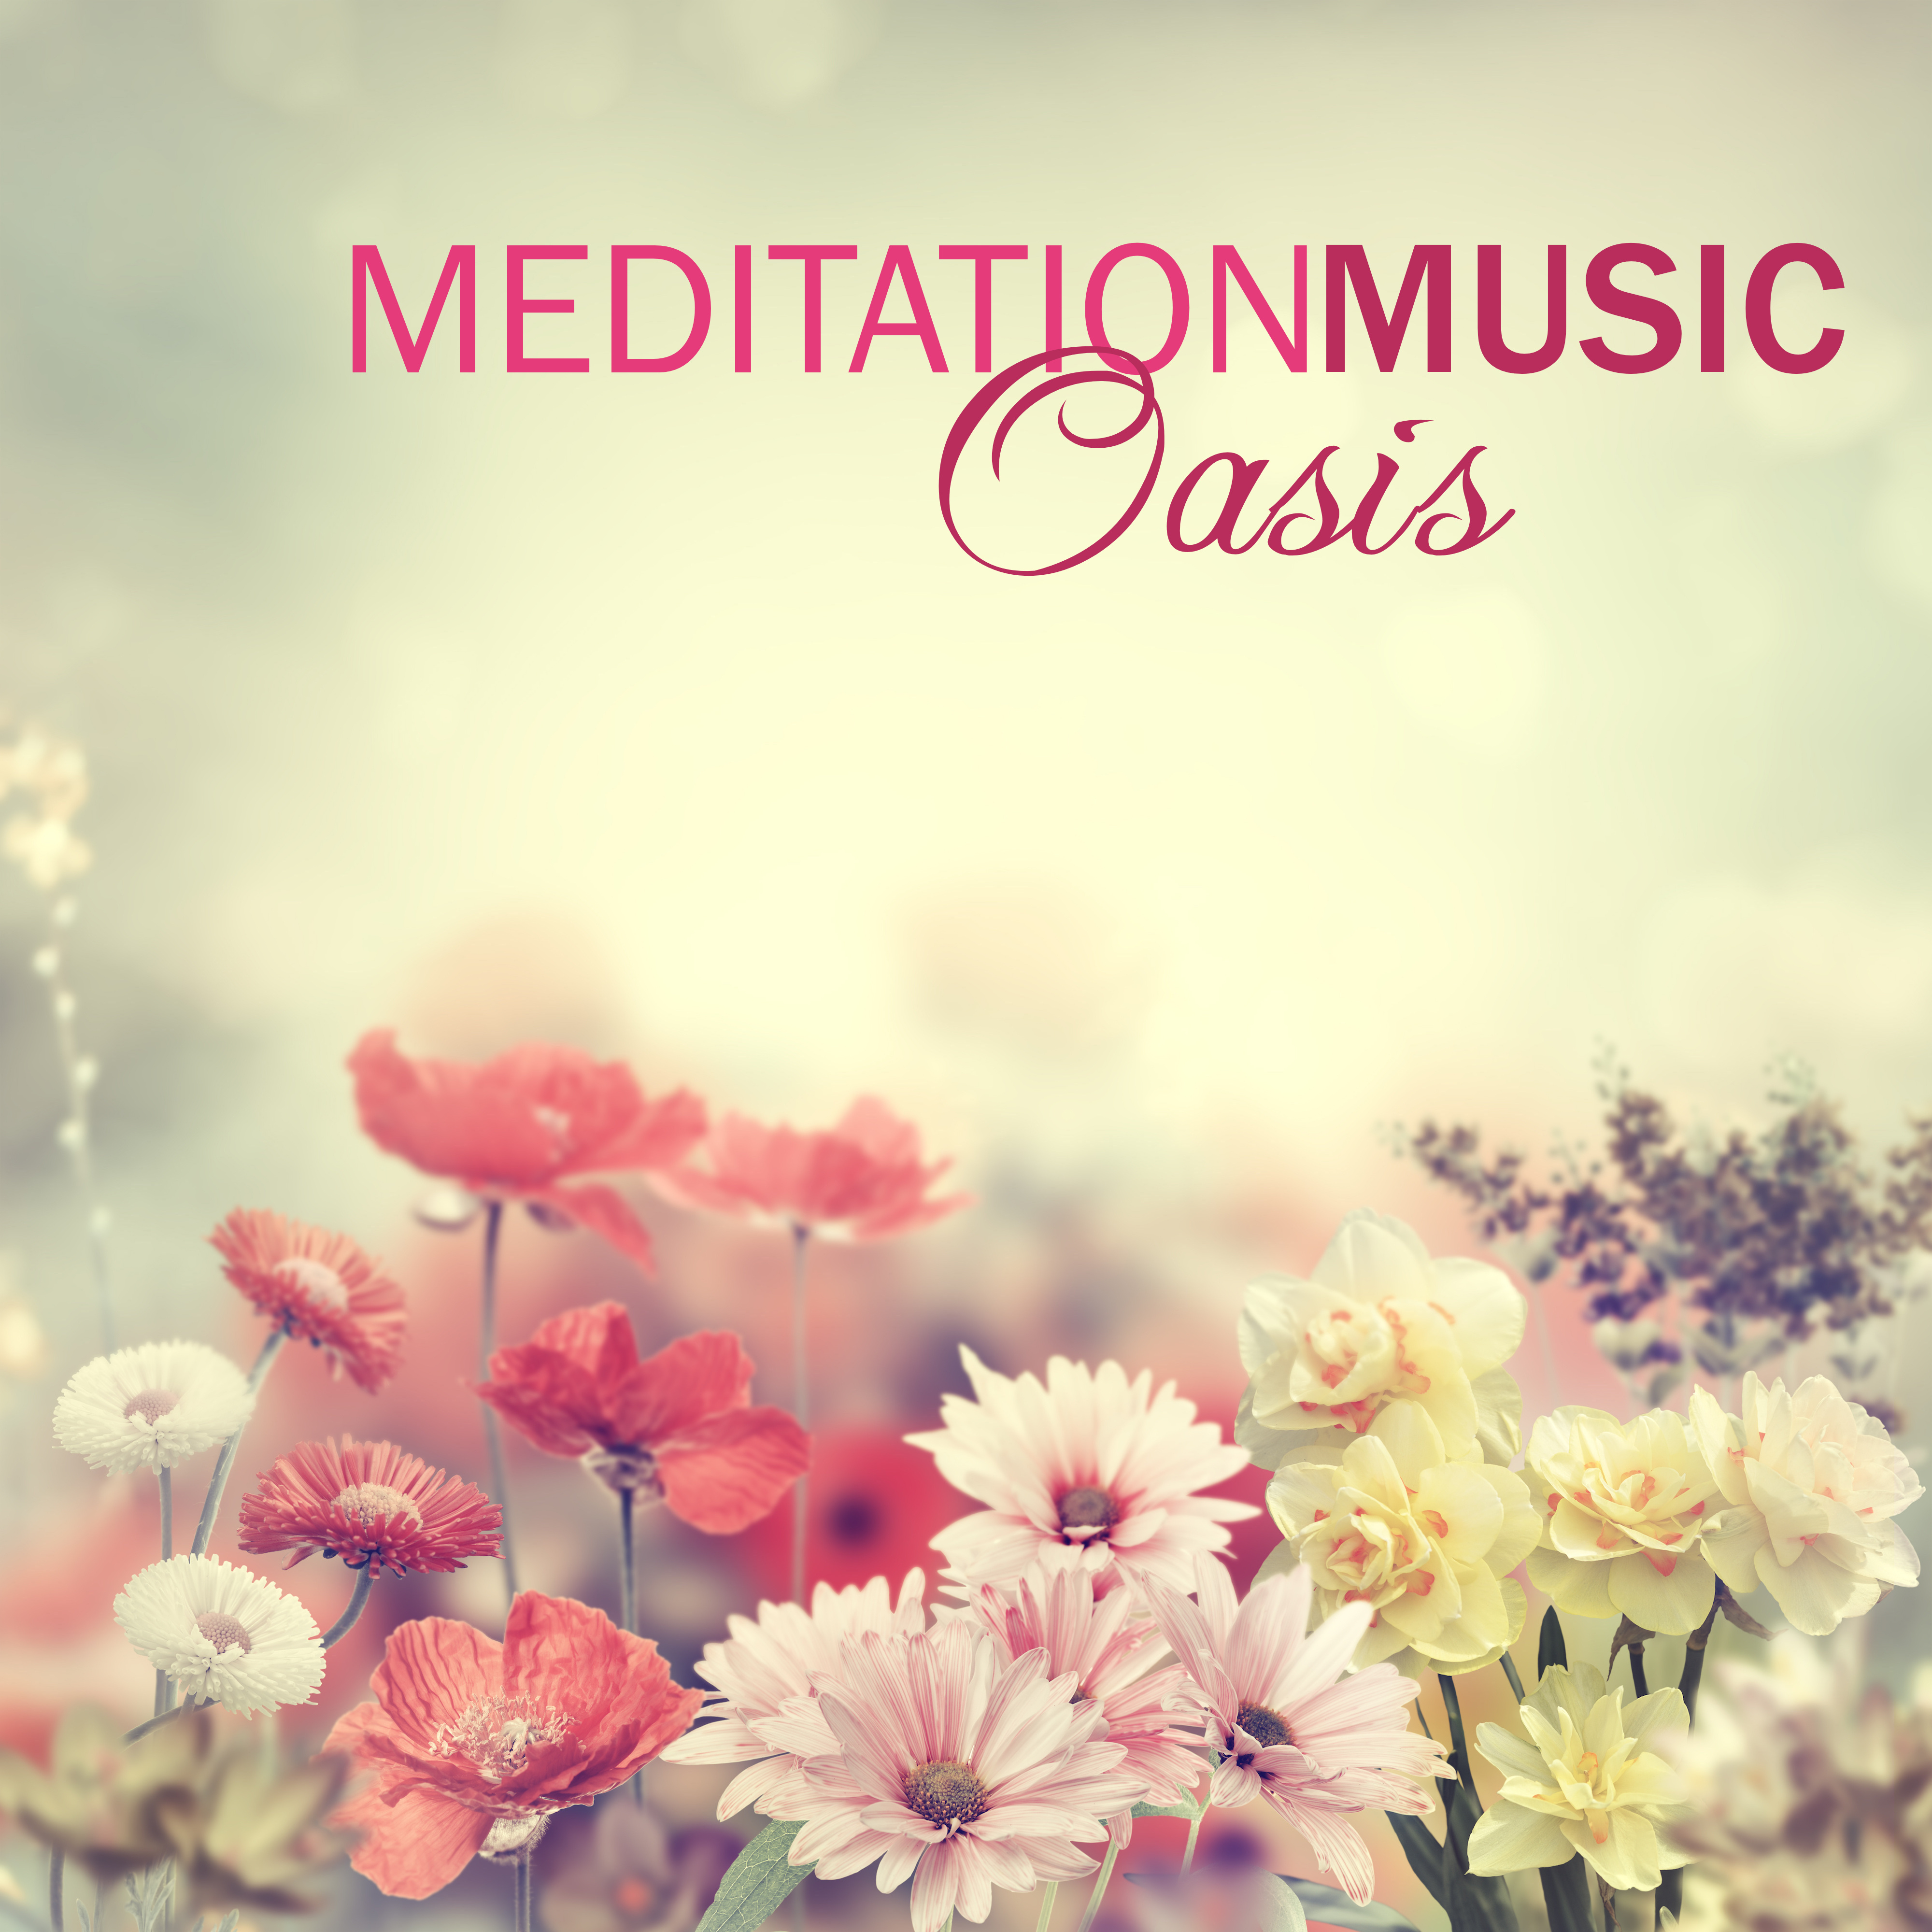 Meditation Music Oasis - 25 Meditative Relaxation Music & Zen Tibetan Buddhist Tracks for Inner Peace, Guided Imagery and Chakra Balancing